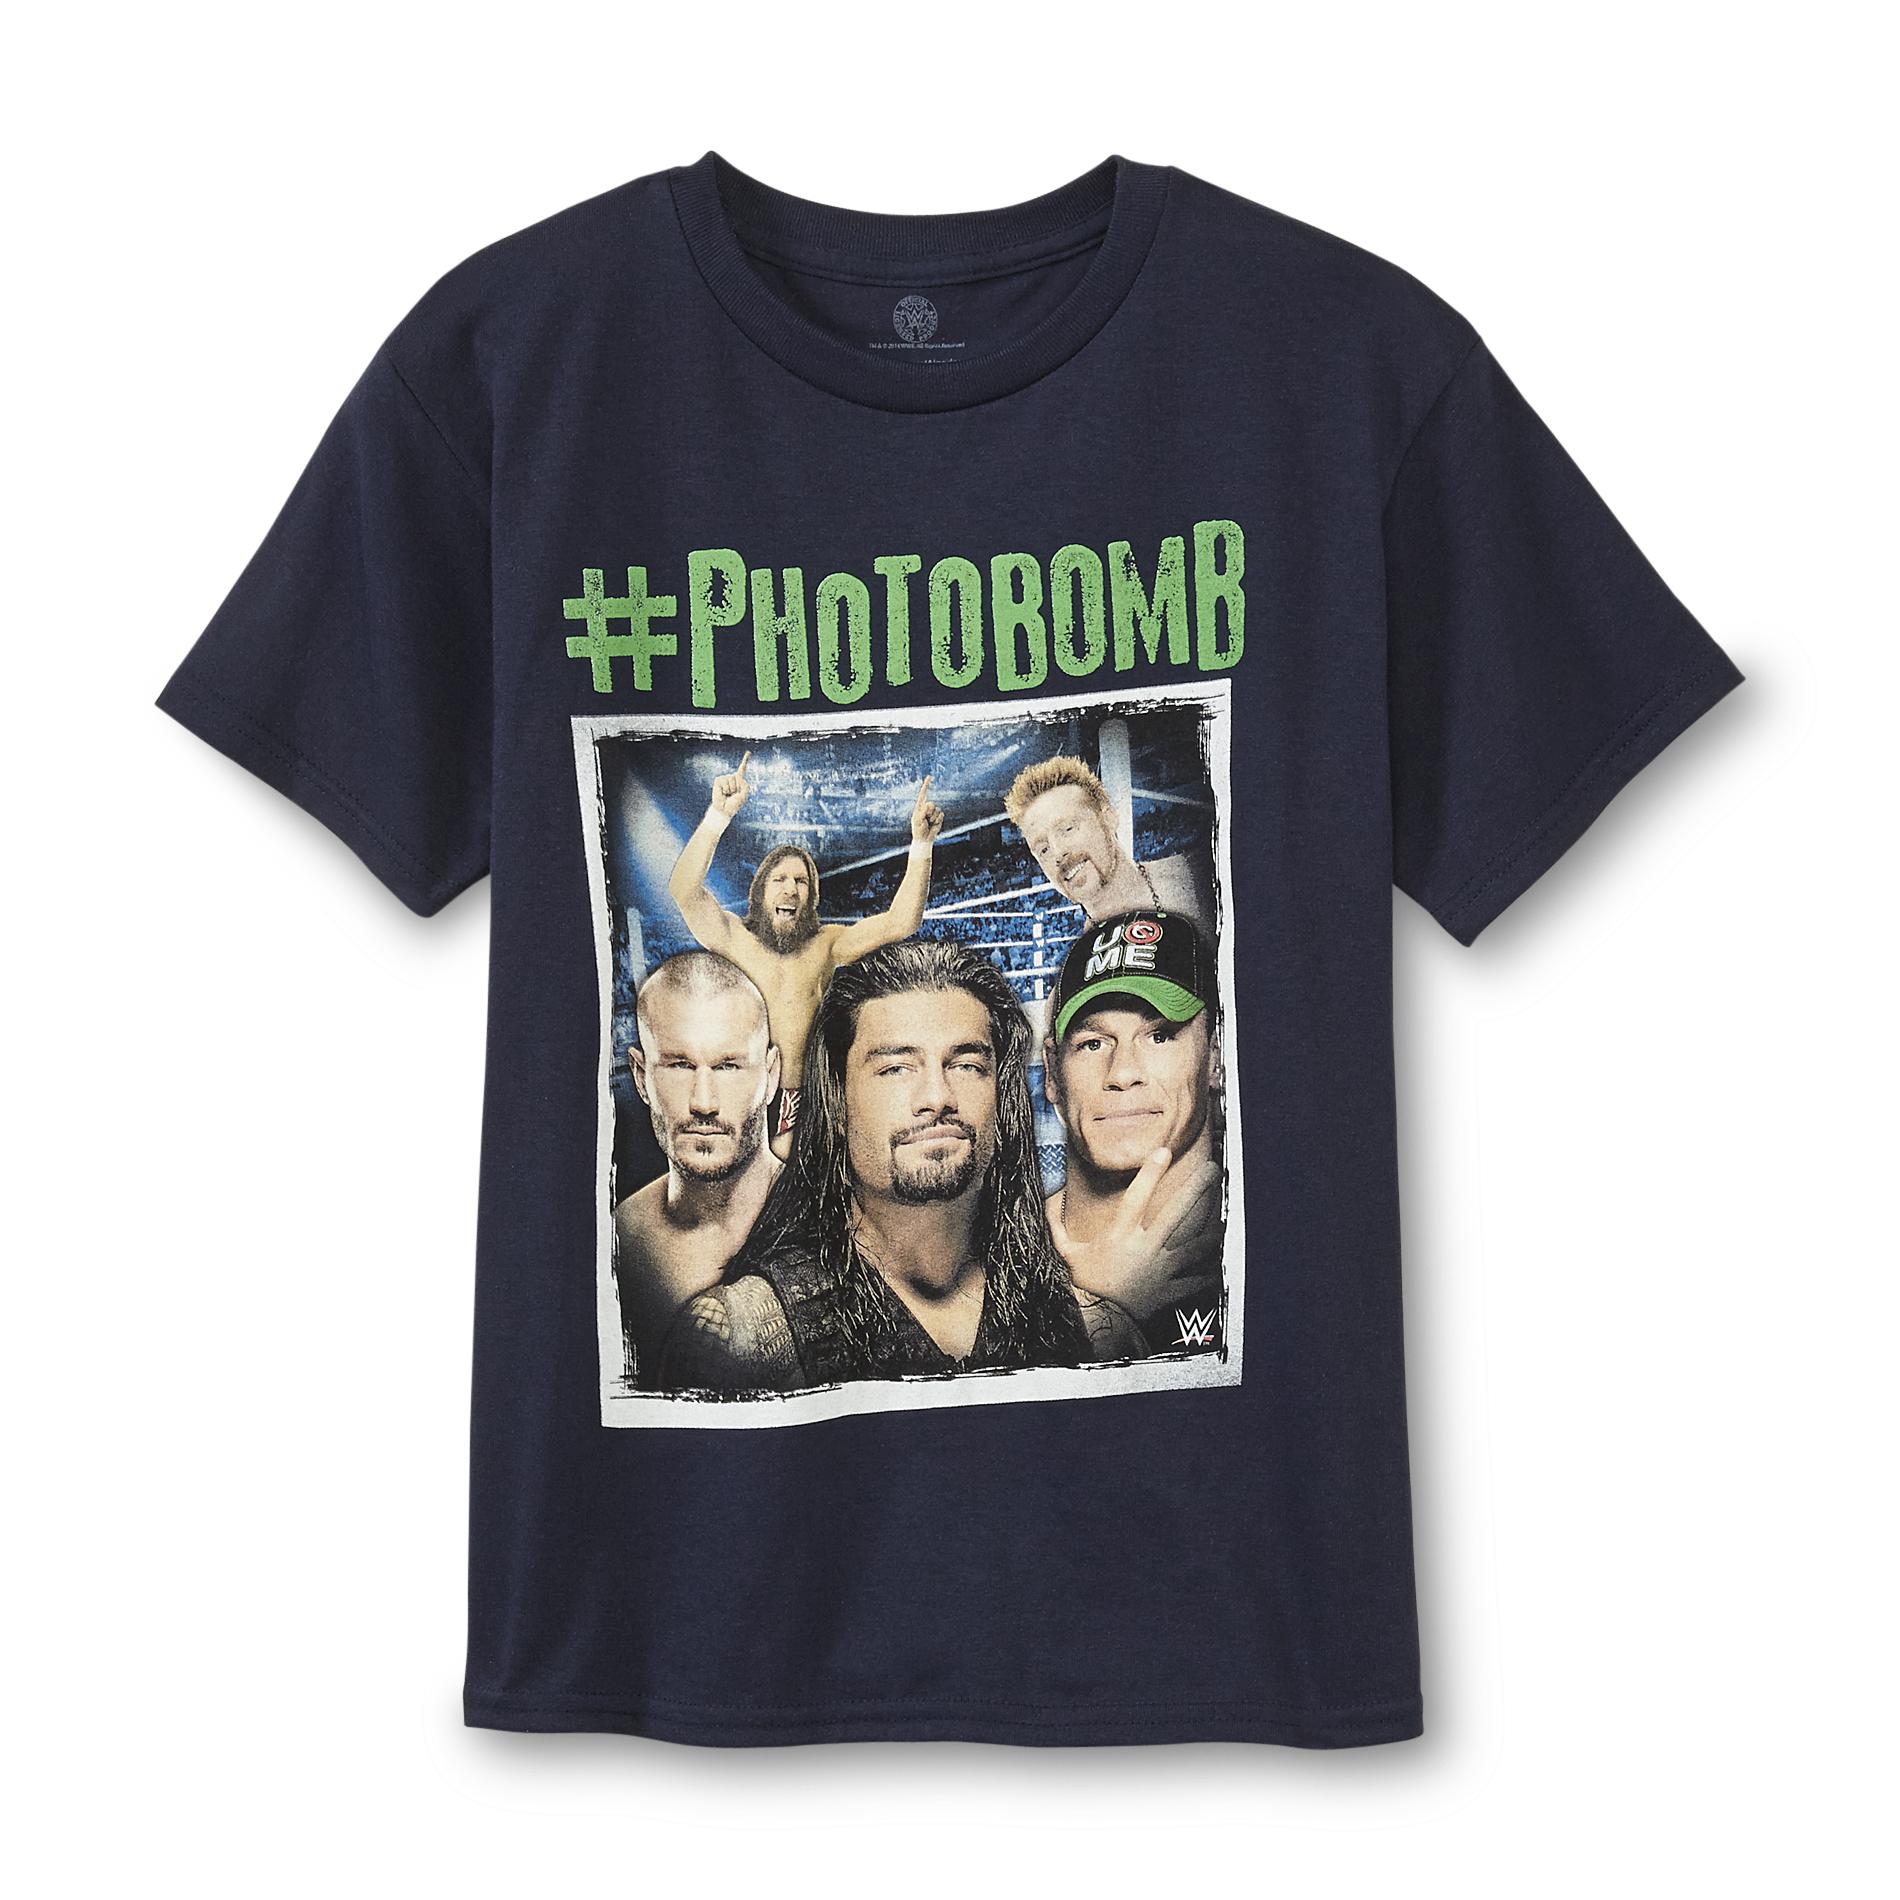 WWE Boy's Graphic T-Shirt - #Photobomb